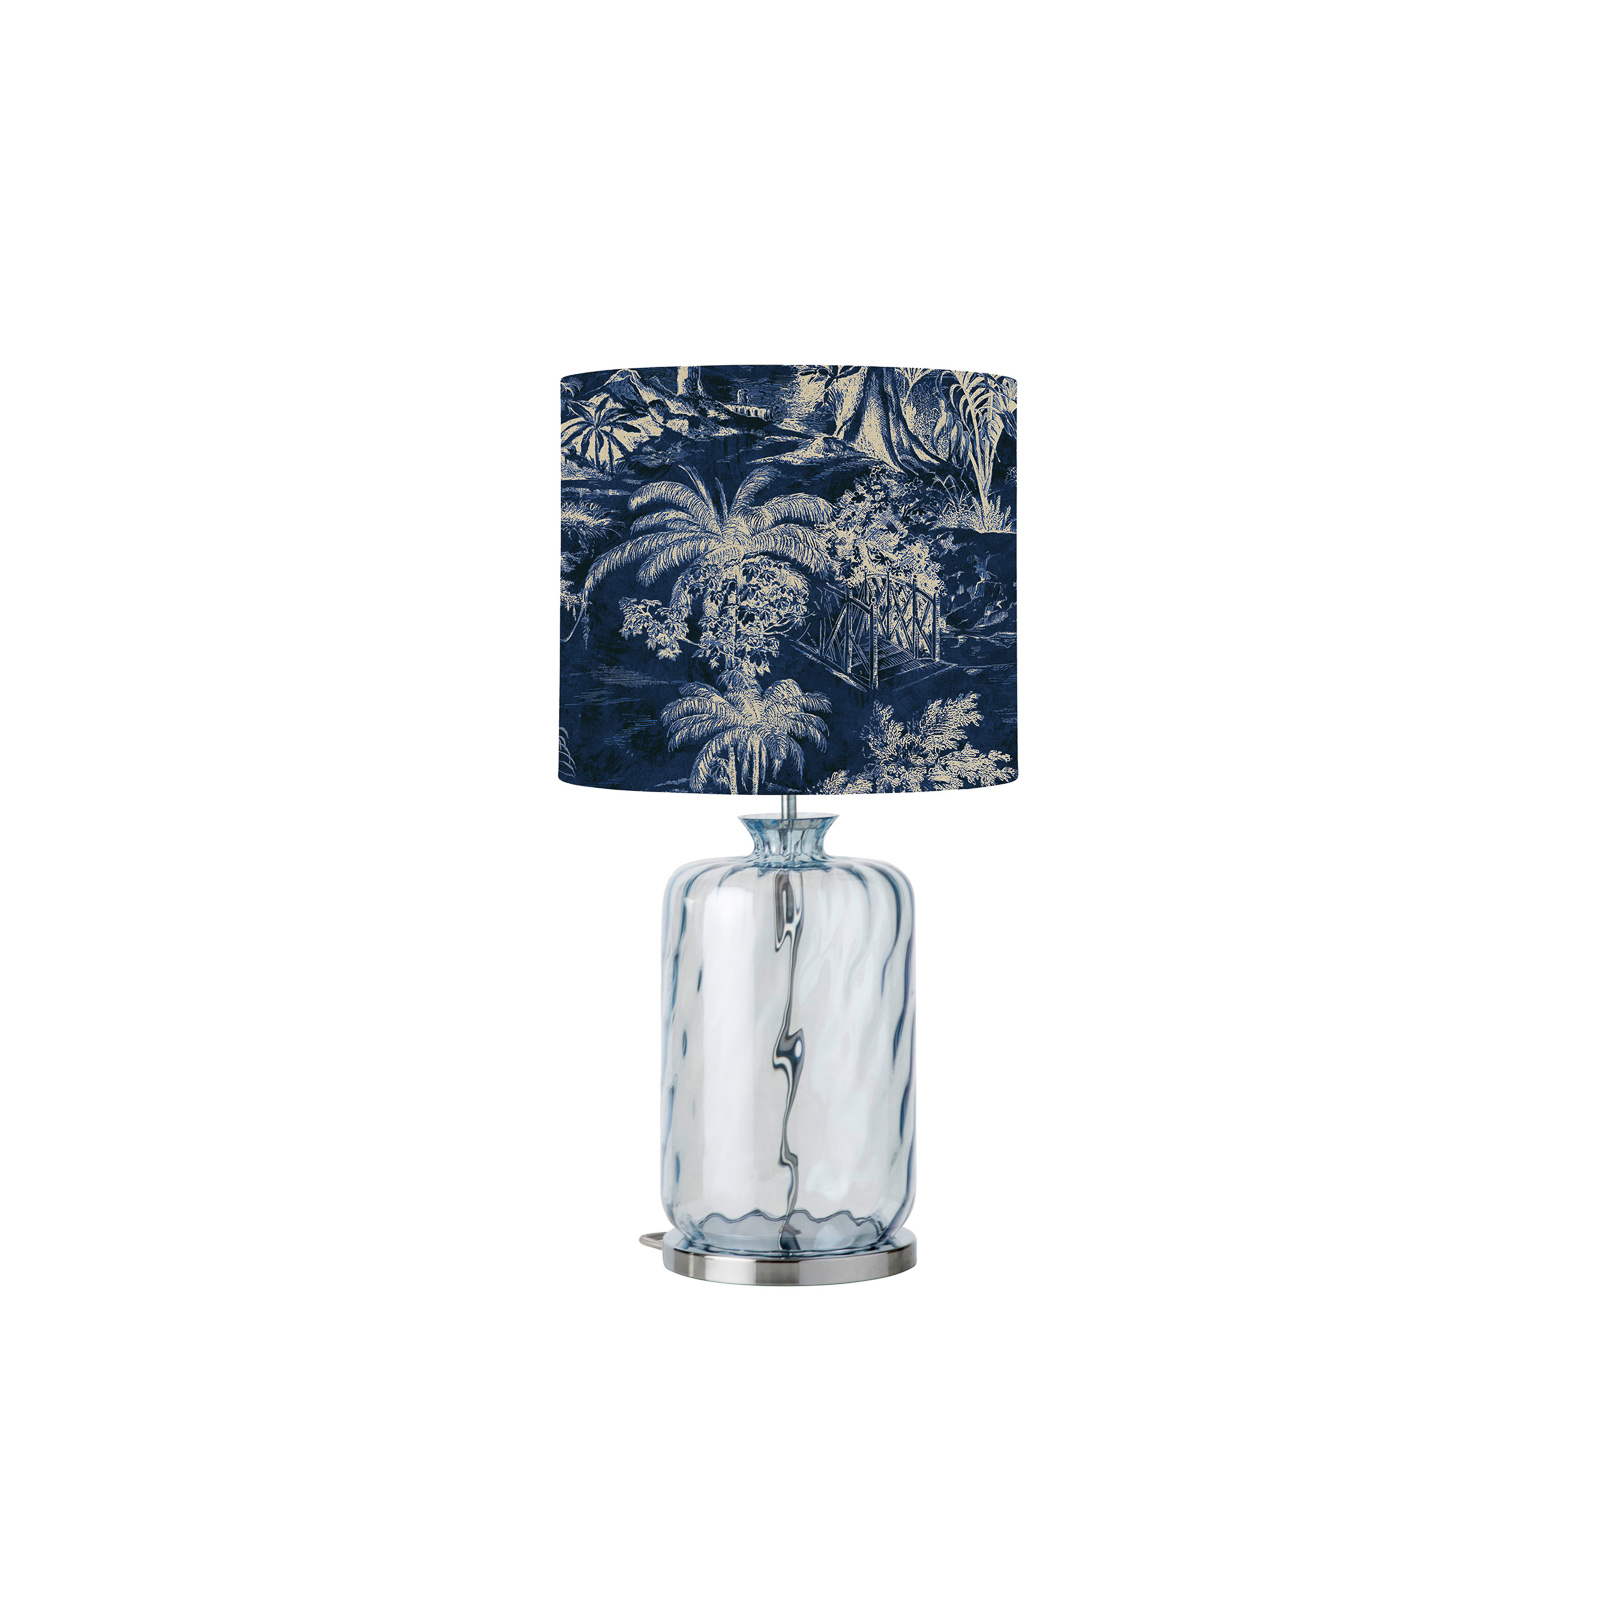 EBB & FLOW Pillar lampe à poser, Palms indigo/blue